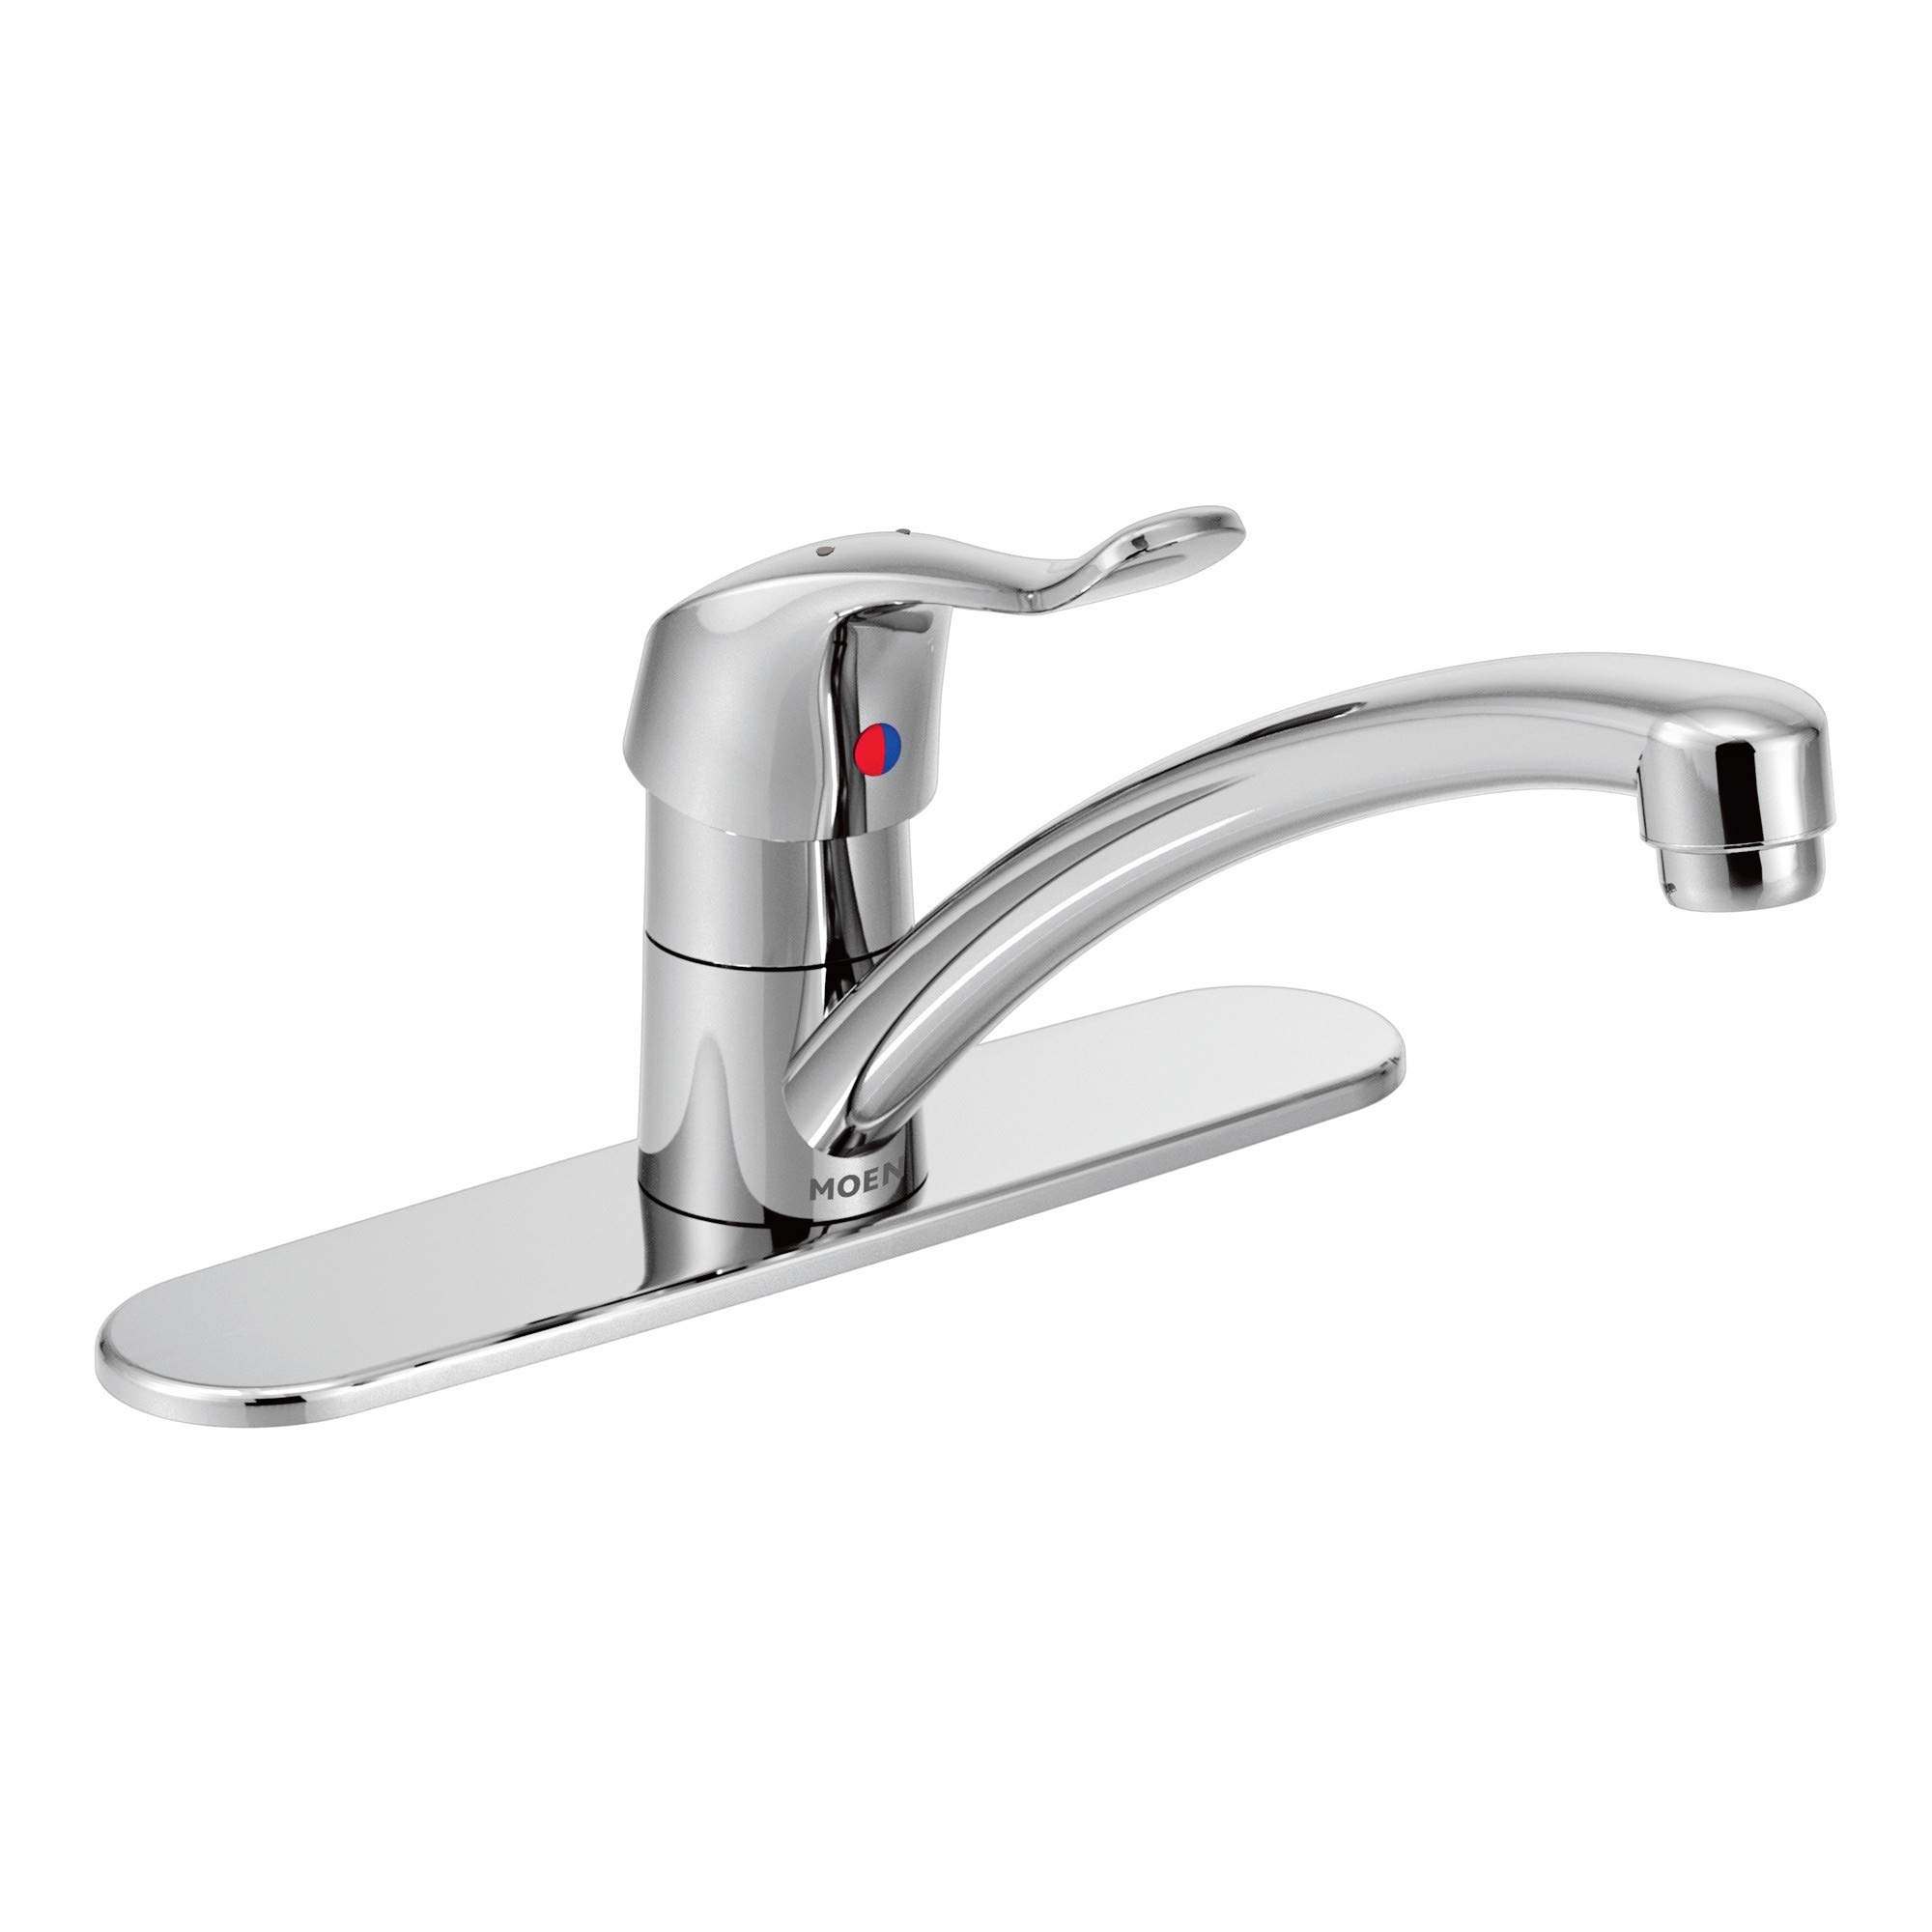 Moen 8701 Commercial M-DURA One-Handle Kitchen Faucet 1.5 GPM, Chrome